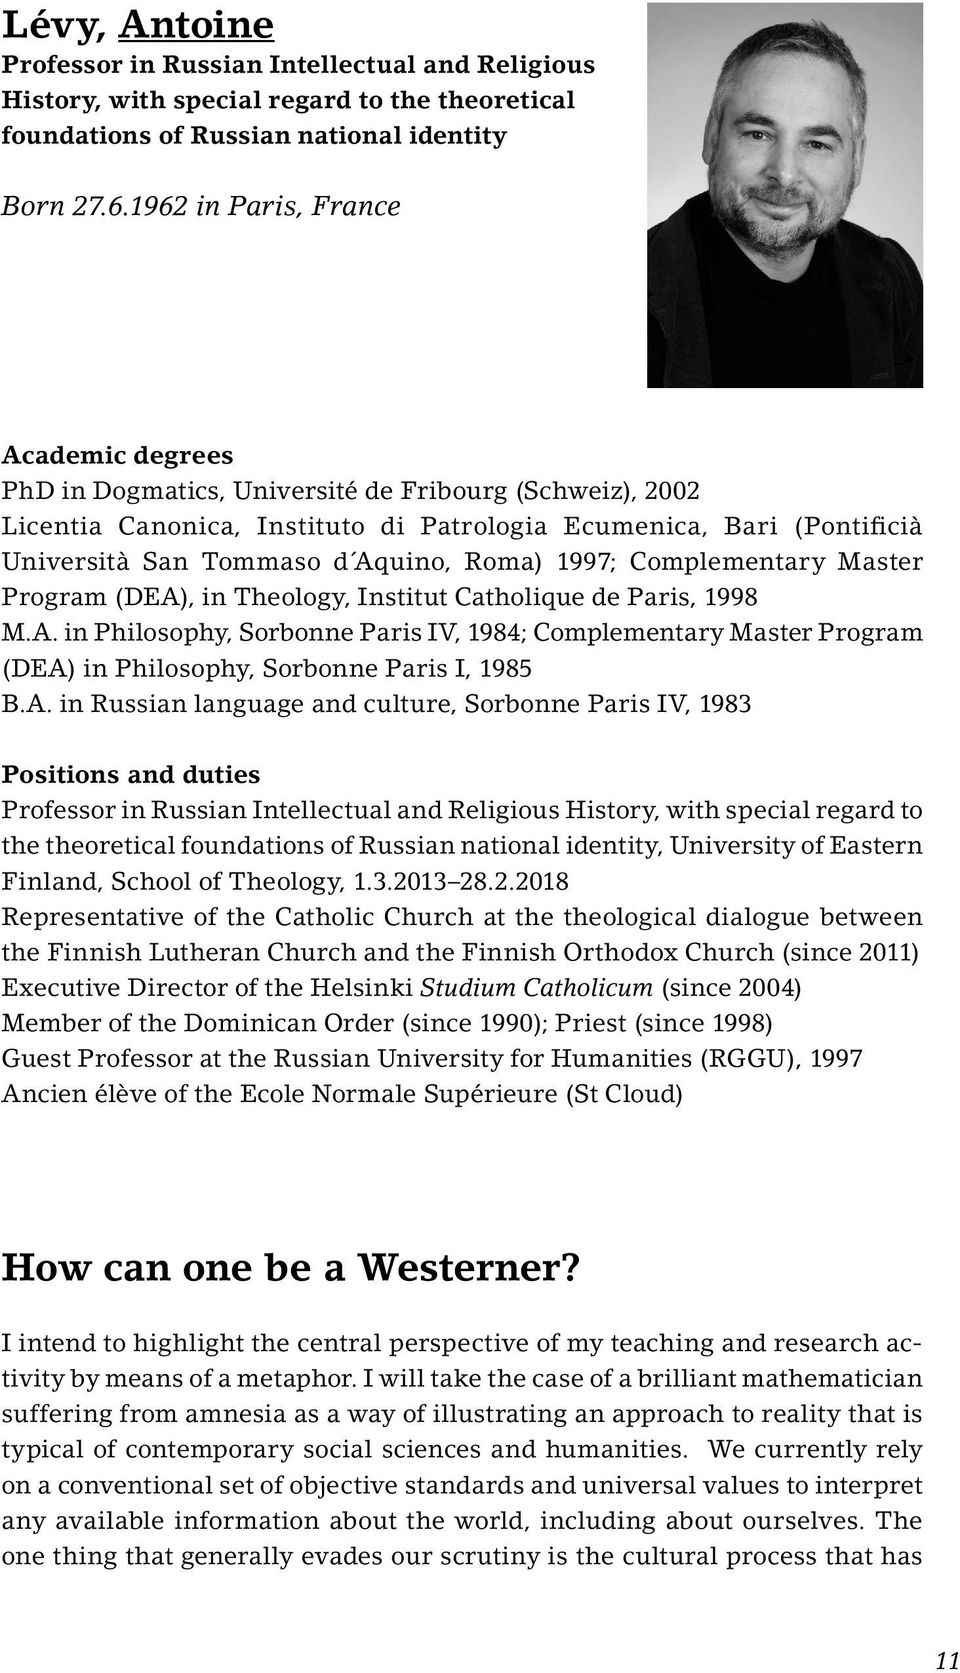 Roma) 1997; Complementary Master Program (DEA), in Theology, Institut Catholique de Paris, 1998 M.A. in Philosophy, Sorbonne Paris IV, 1984; Complementary Master Program (DEA) in Philosophy, Sorbonne Paris I, 1985 B.